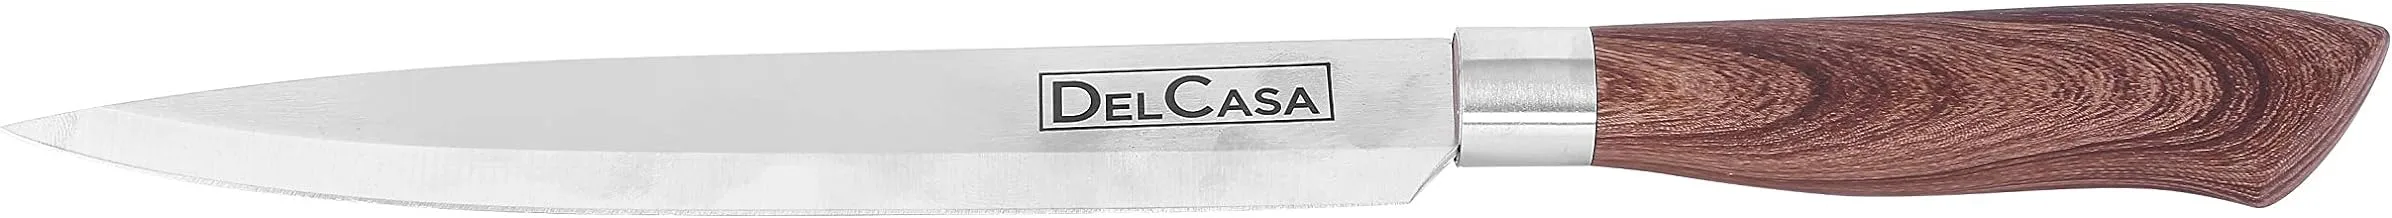 Delcasa Slicer Knife 8Inch, Multi-Colour, Dc1448